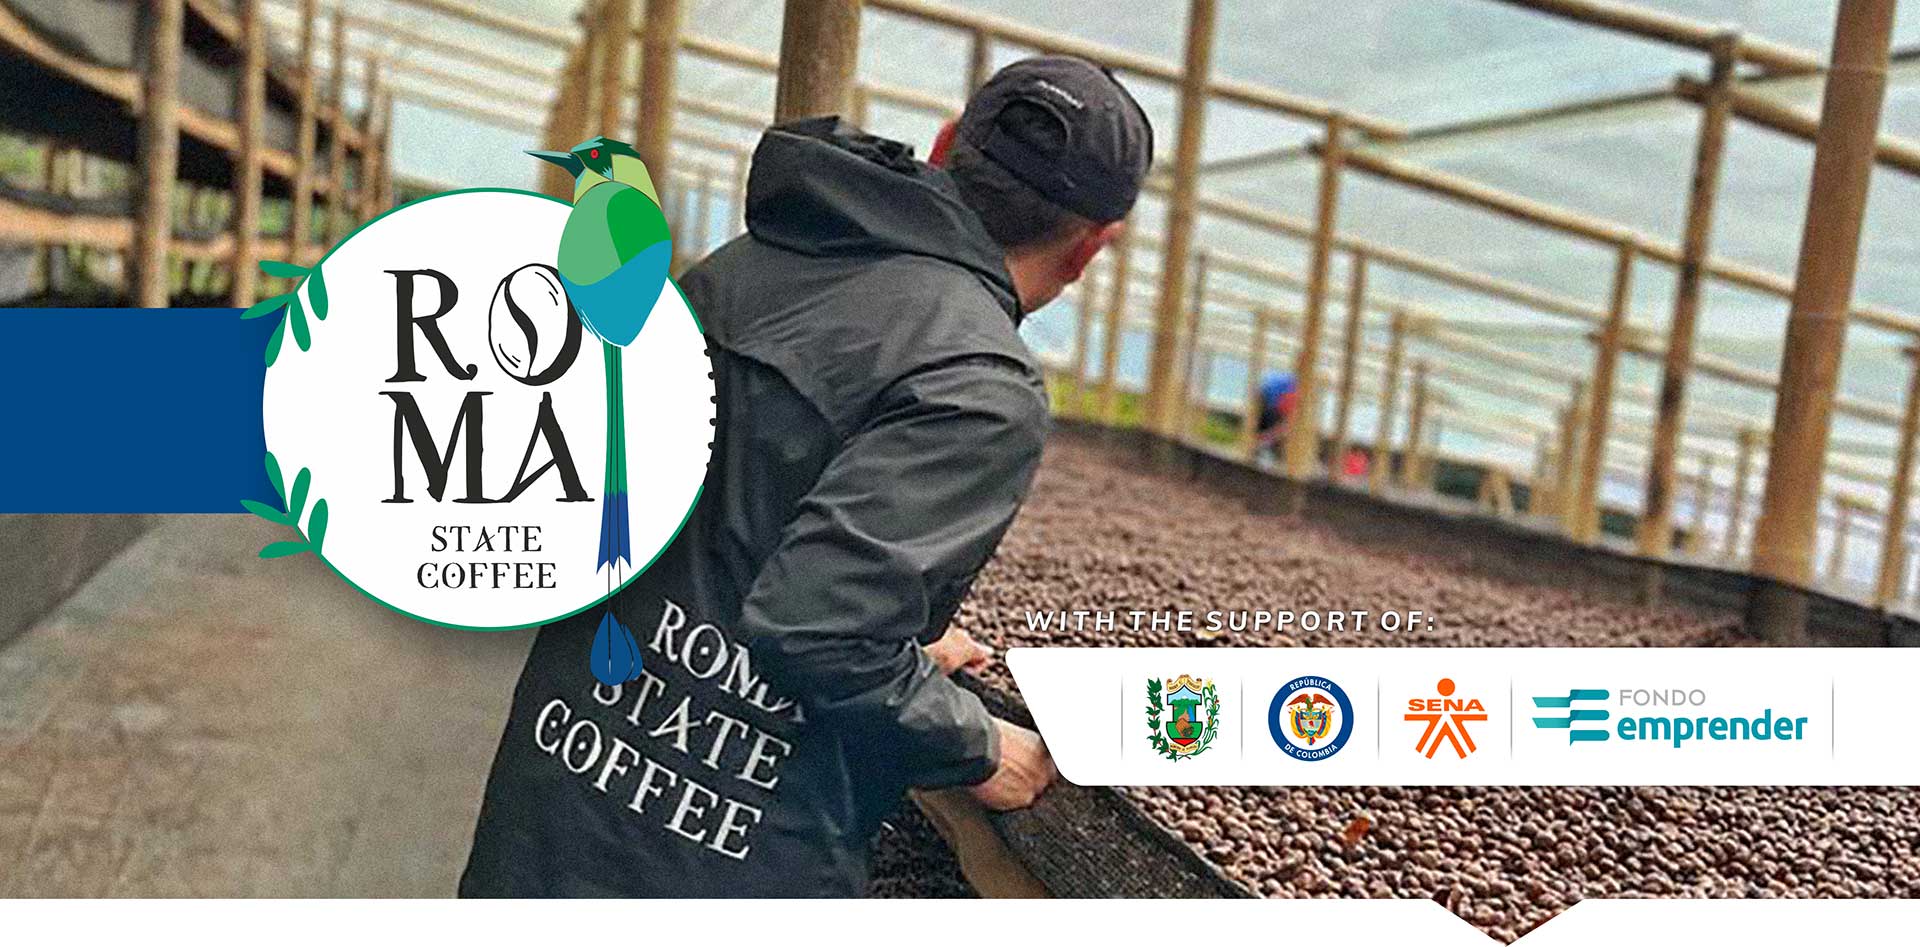 ROMA STATE COFFEE